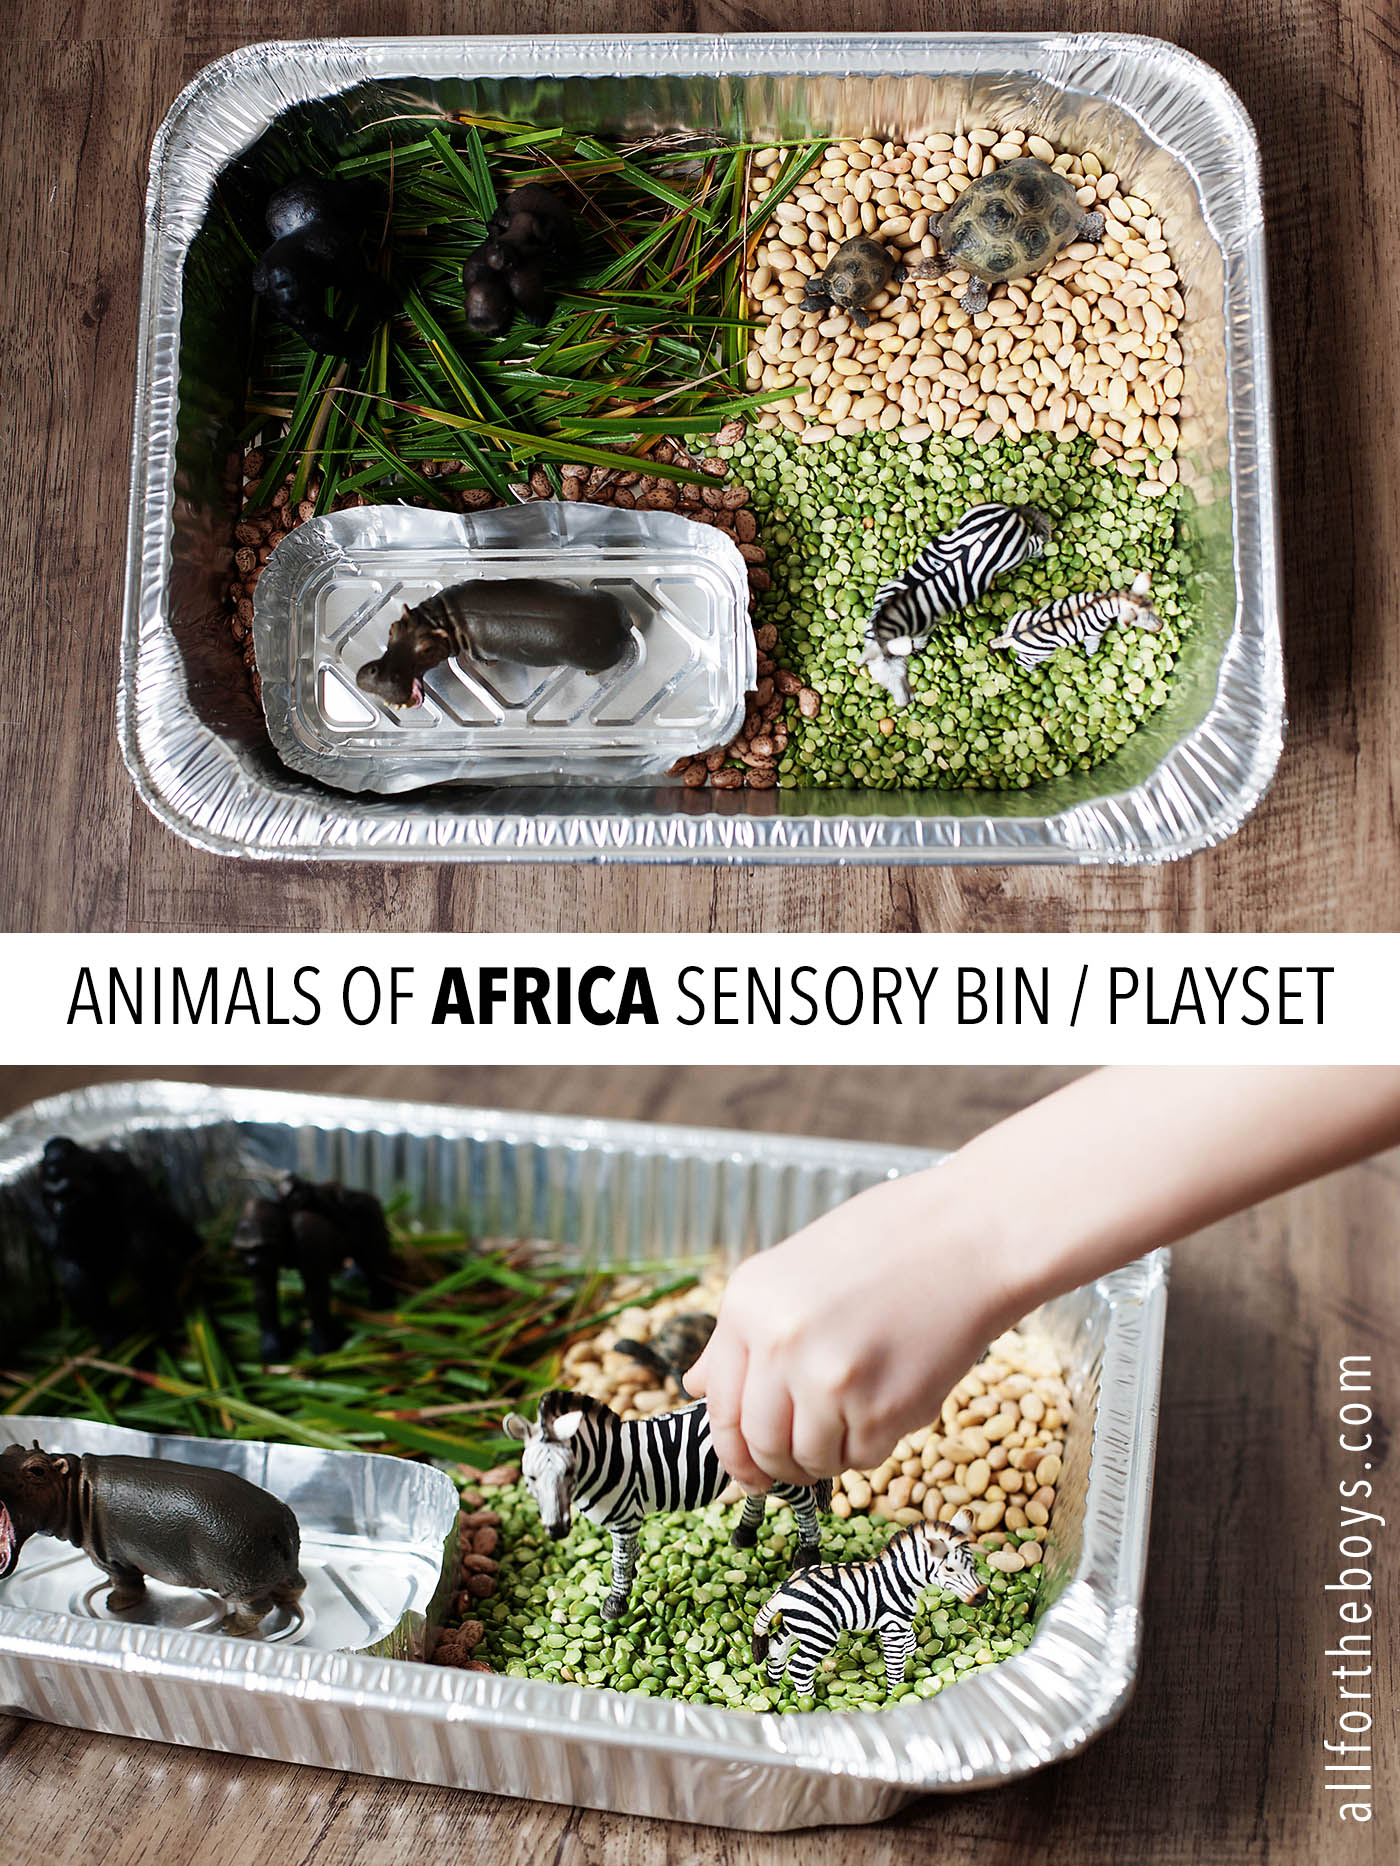 Animals of Africa sensory bin / playset